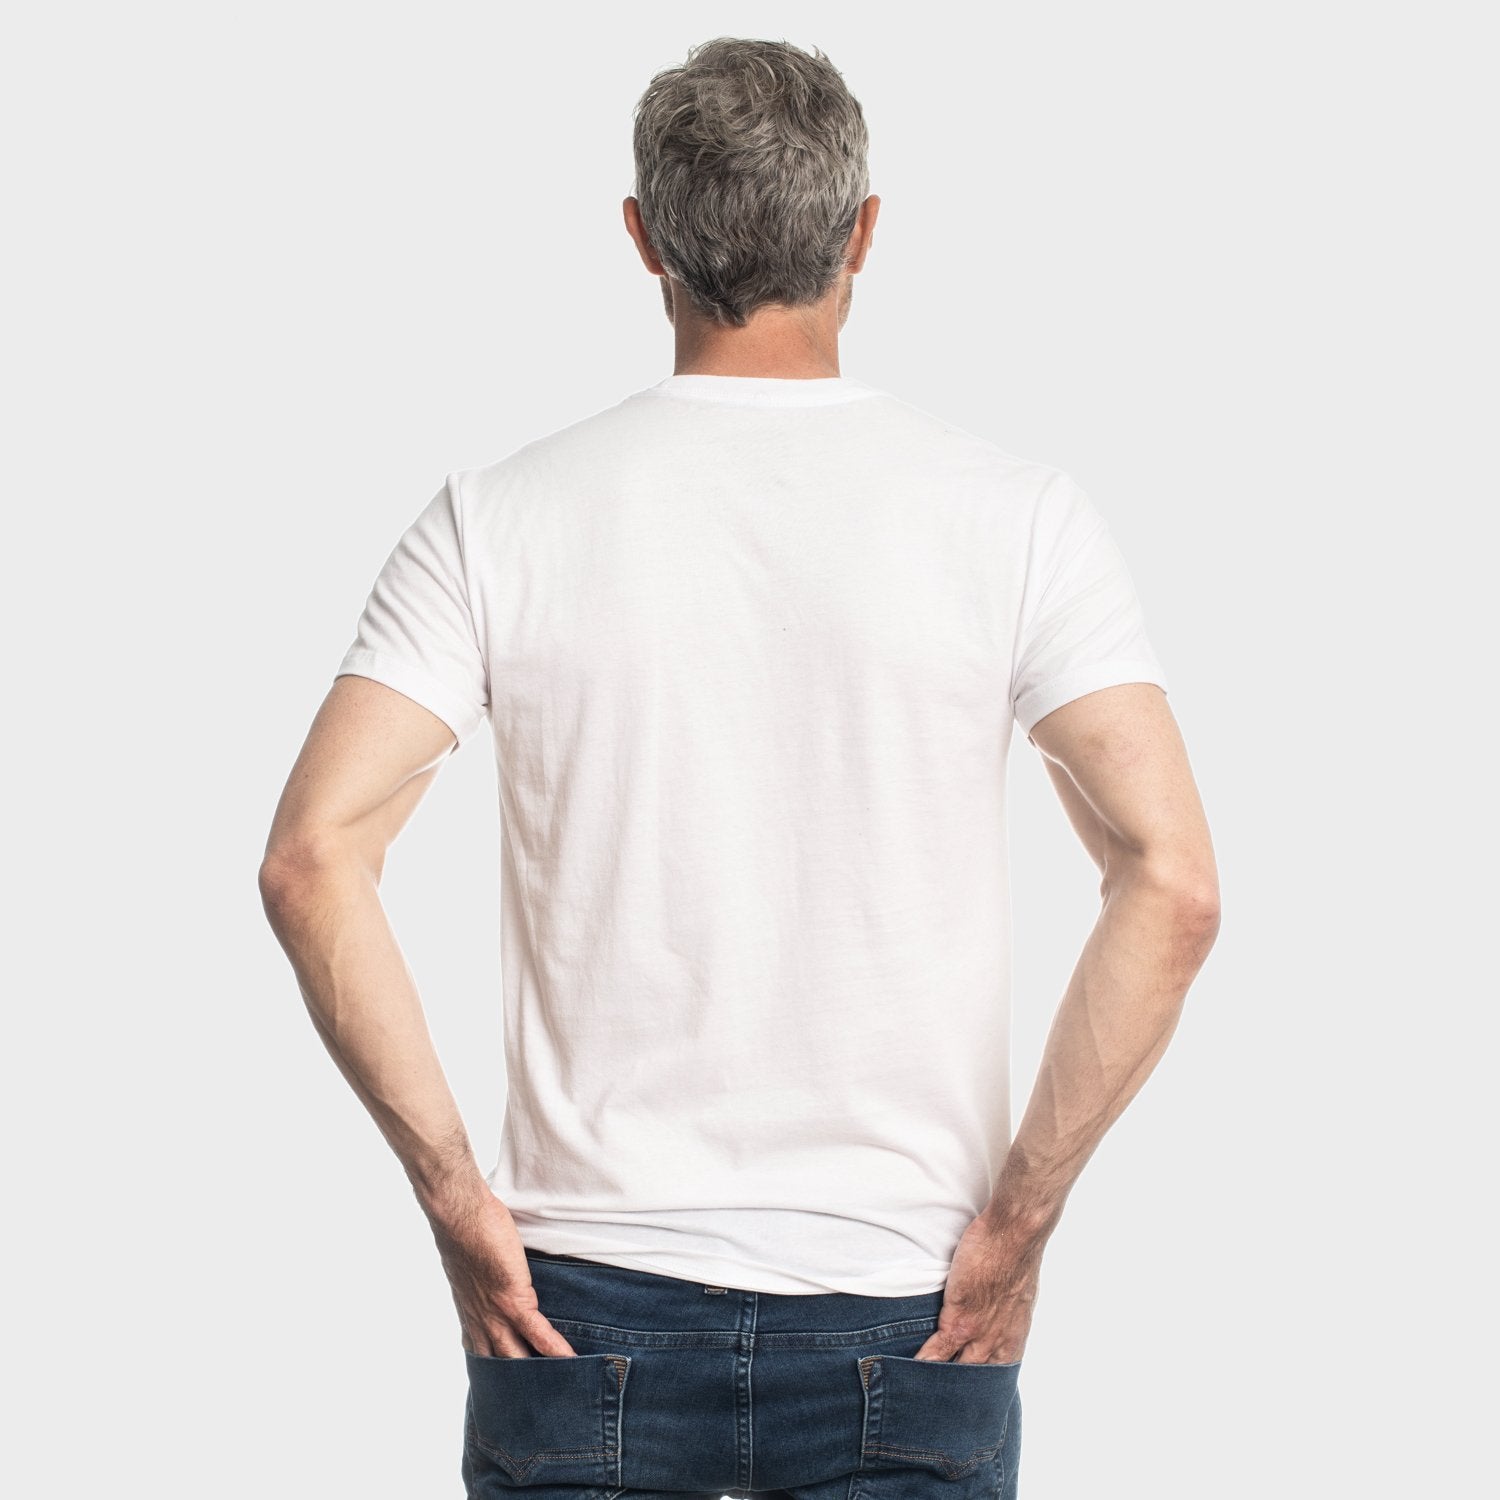 Men's Pocket Tee Shirts - True Classic